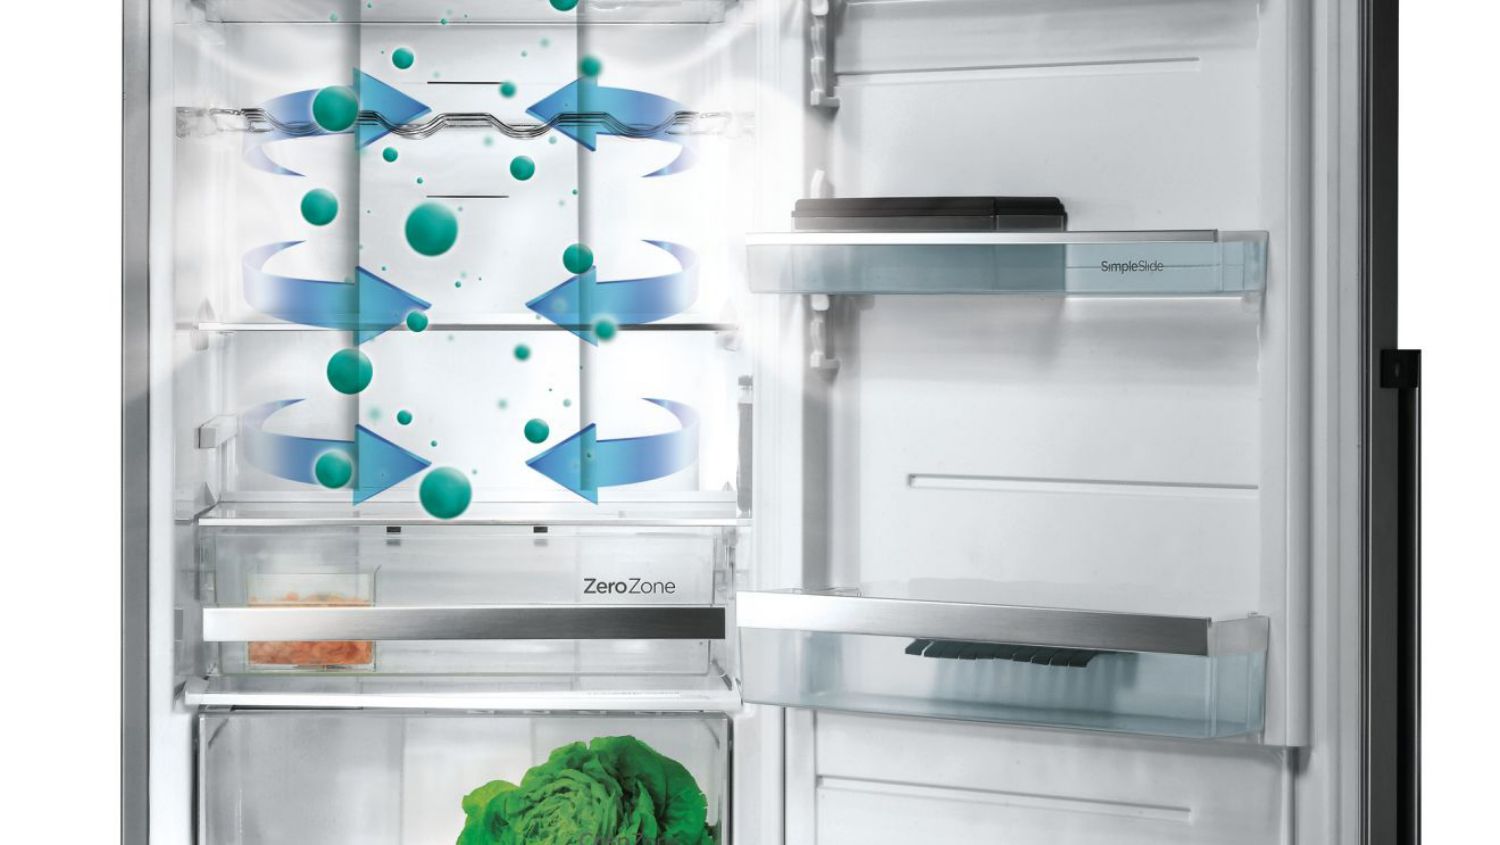 Горение экрана. Холодильник Bosch Multi-Airflow. Bosch Multi Air Flow холодильник. Холодильник Indesit Air Flow System. Hisense no Frost Multi Air Flow.